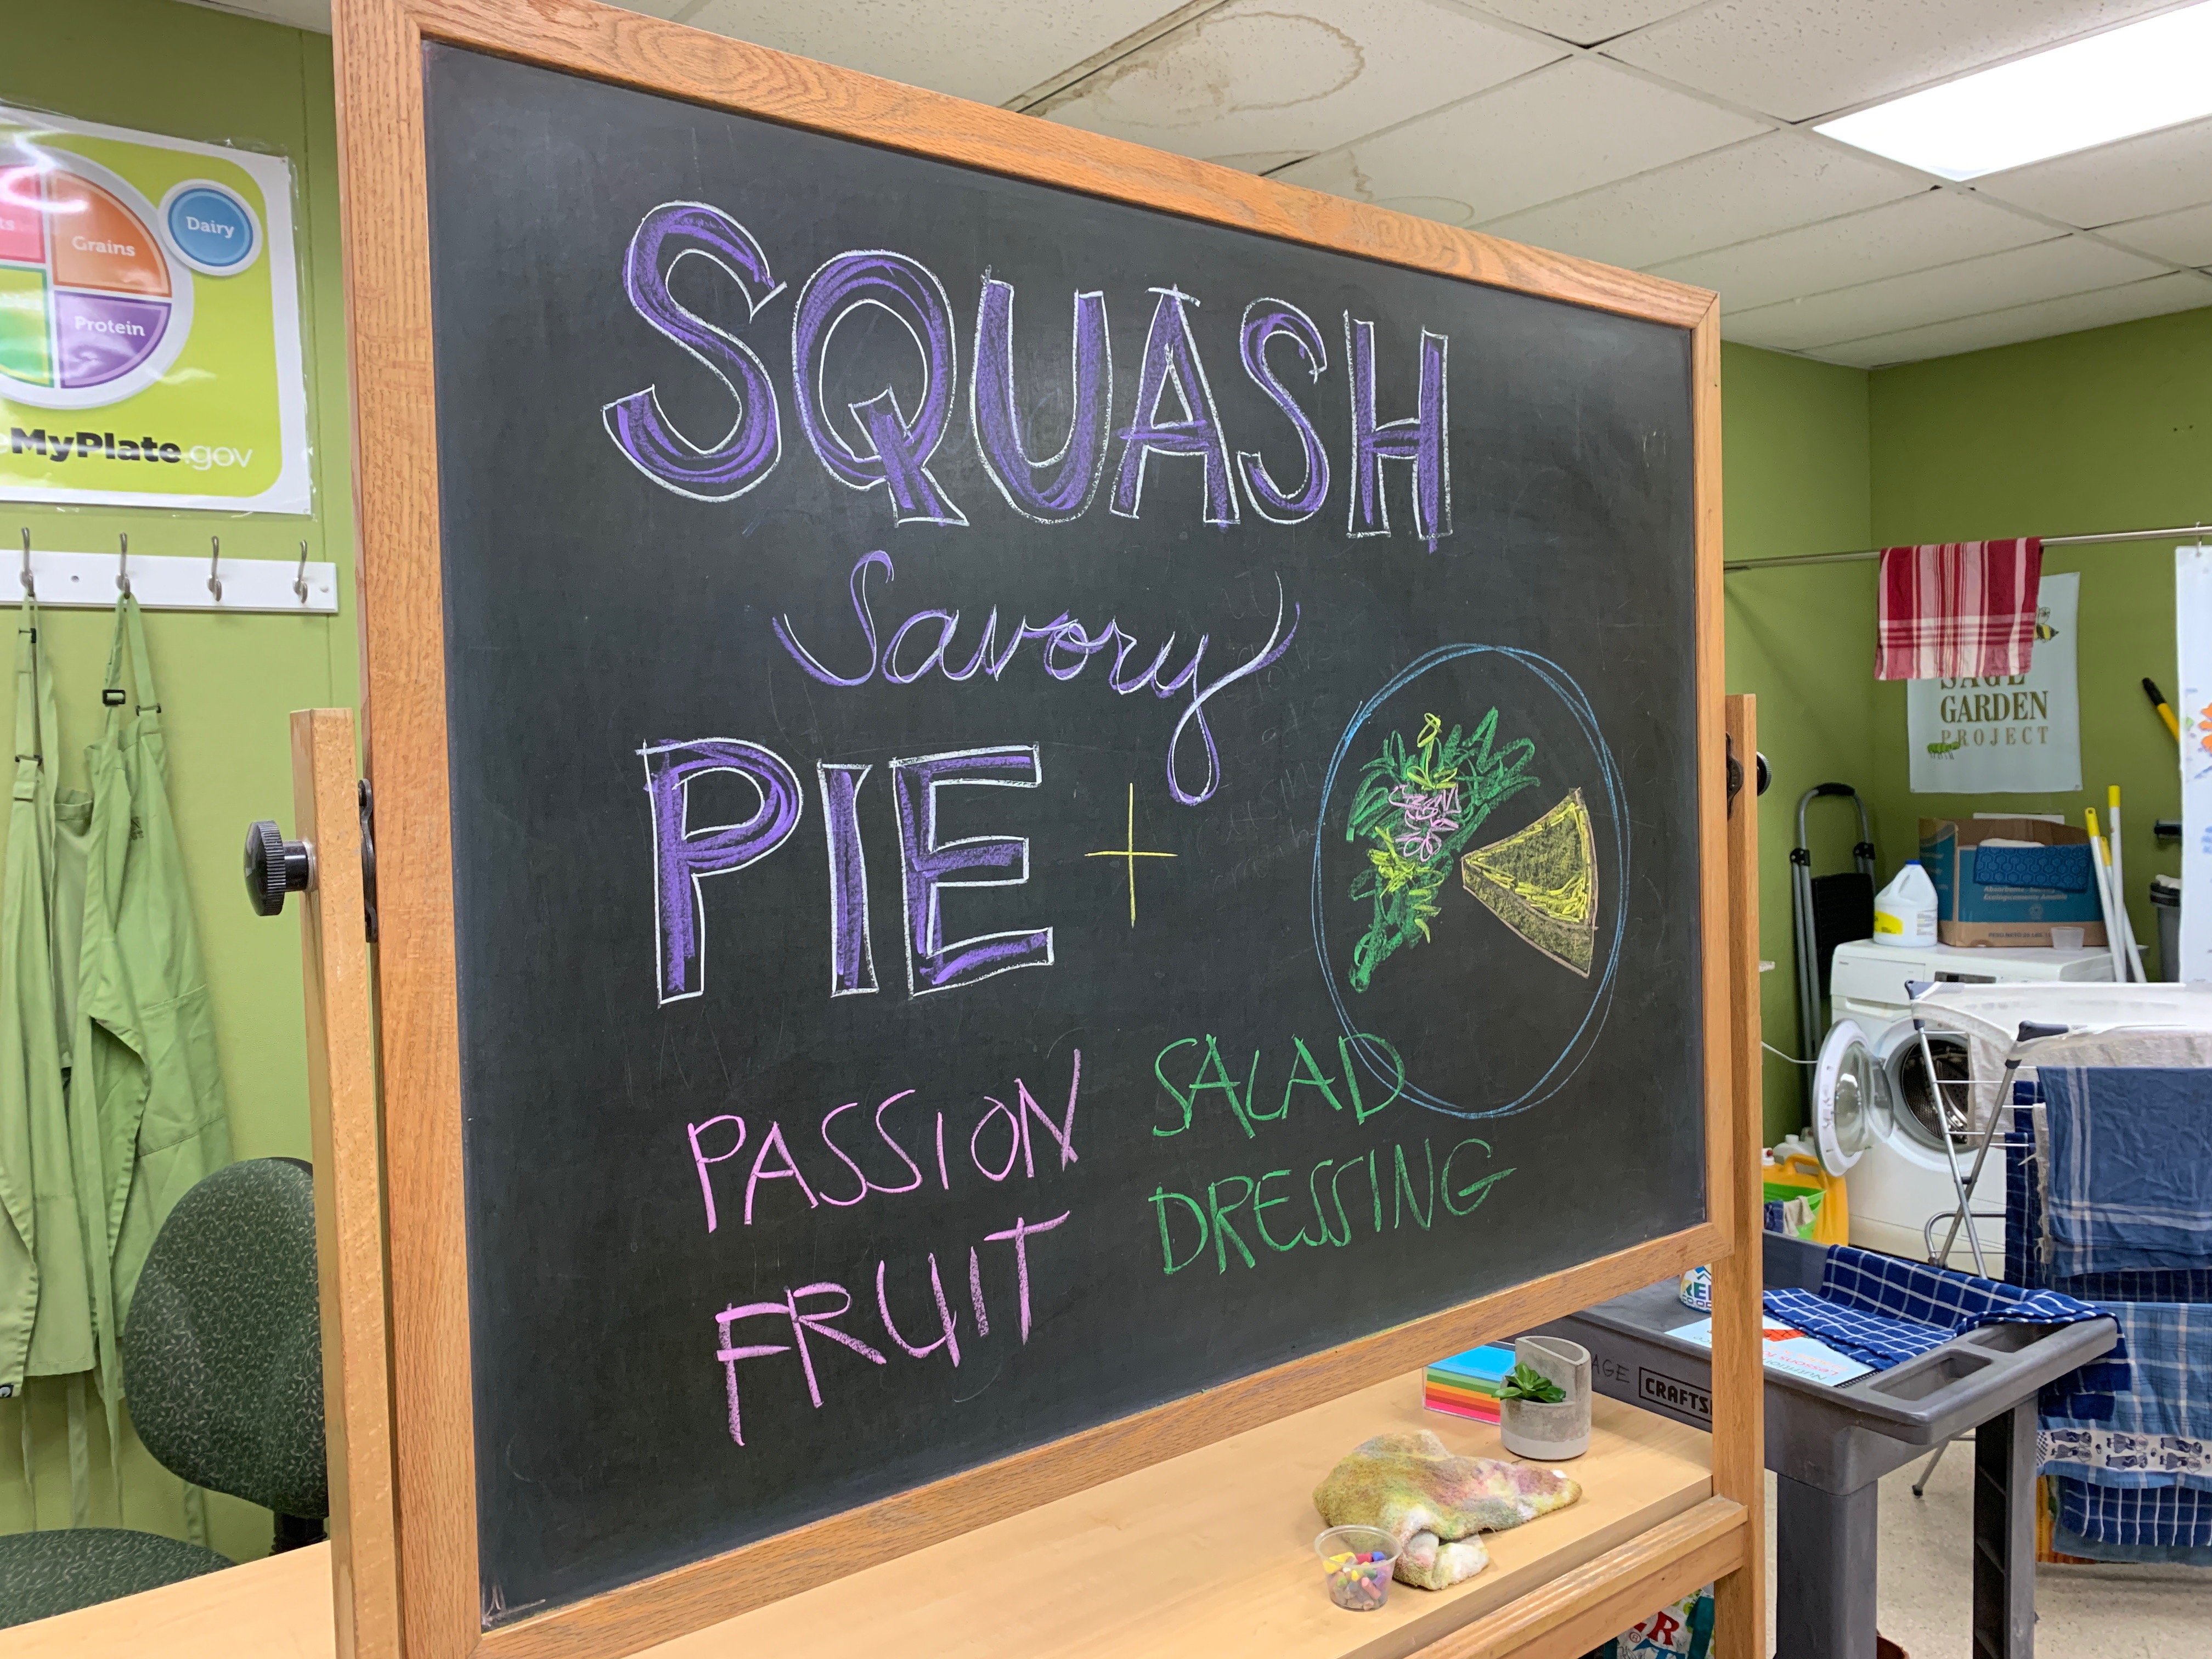 Squash savory pie + passion fruit salad dressing